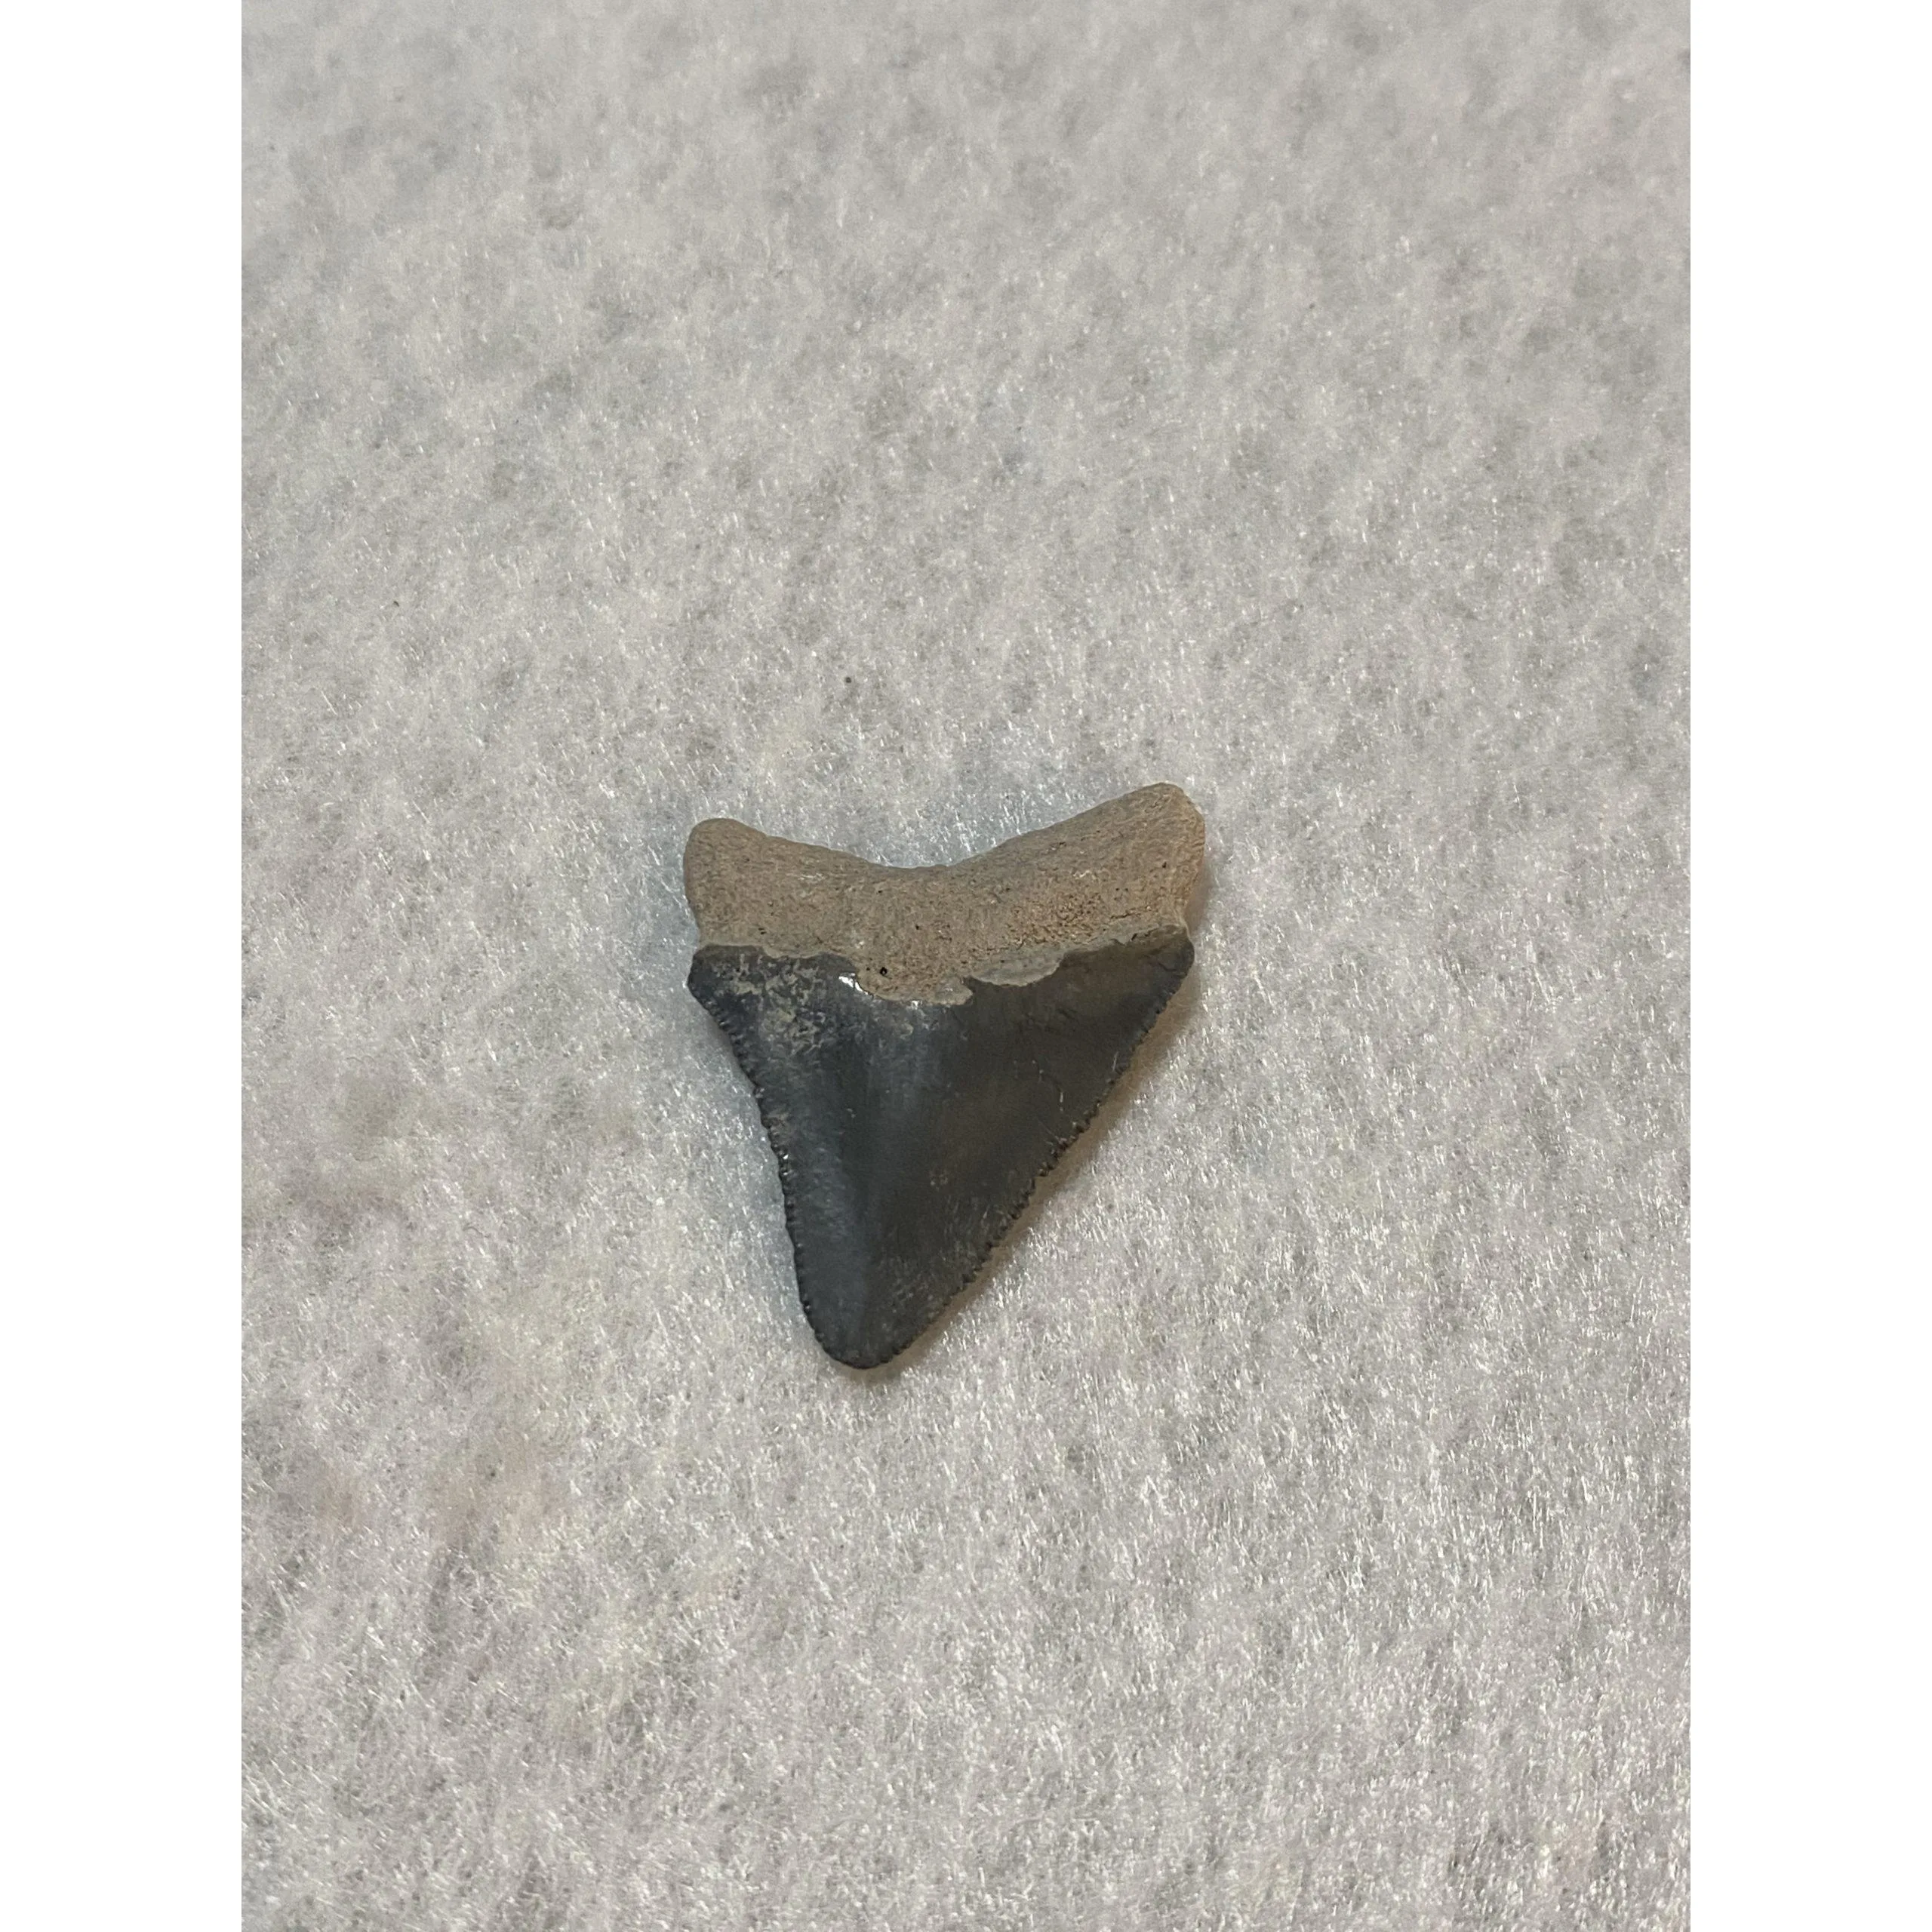 Megalodon Tooth, Bone Valley, Florida, 1.15 inch Prehistoric Online